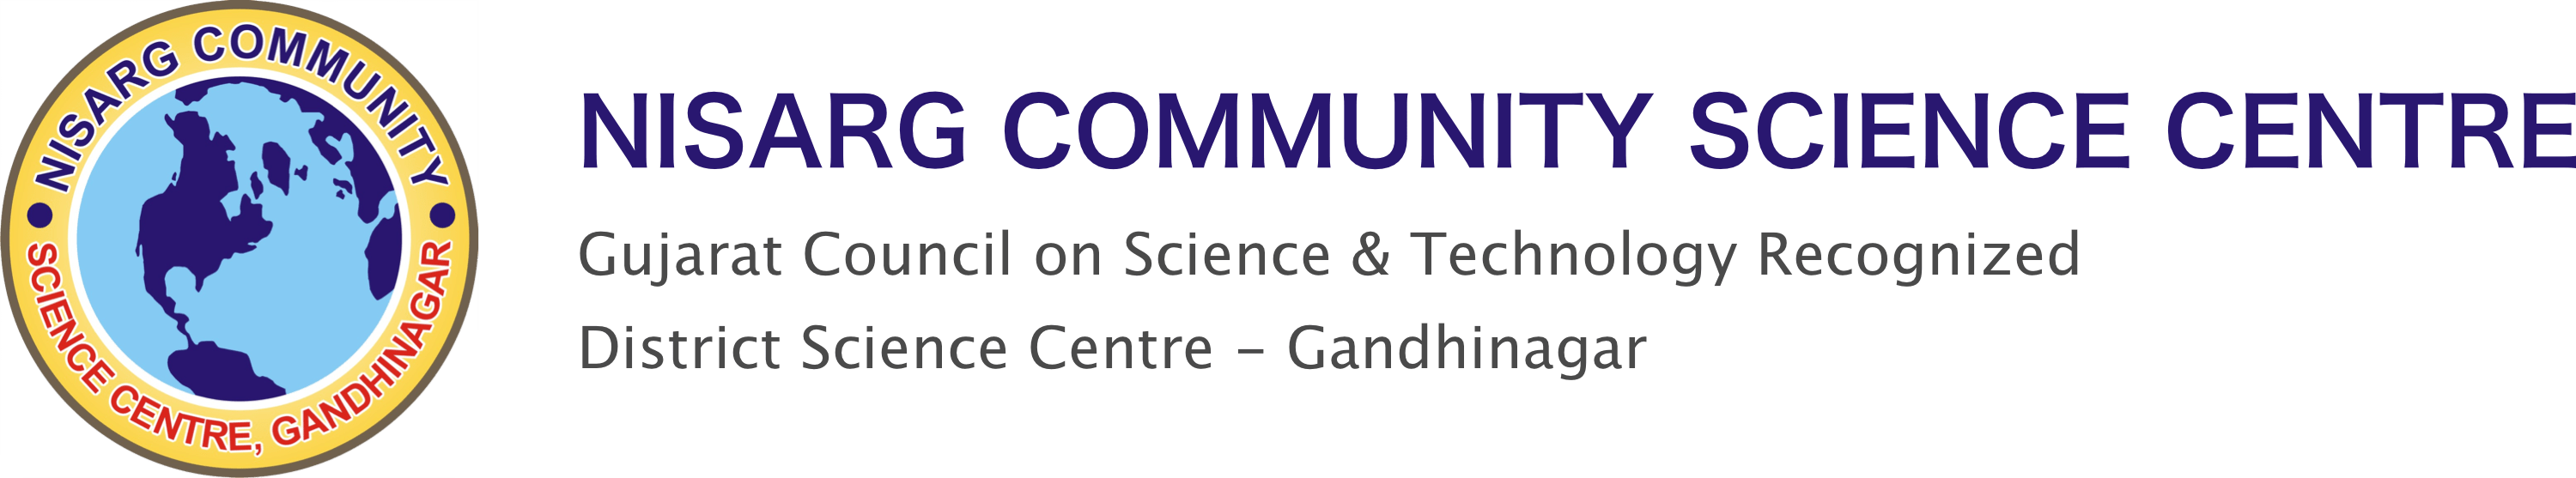 Nisarg Community Science Centre Logo